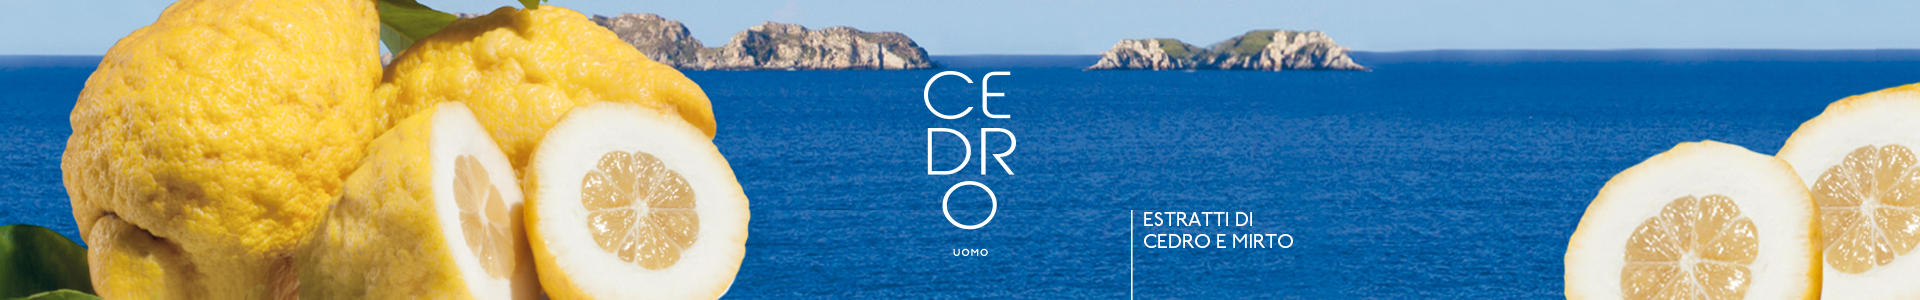 Cedro-1920x300-101018.jpg